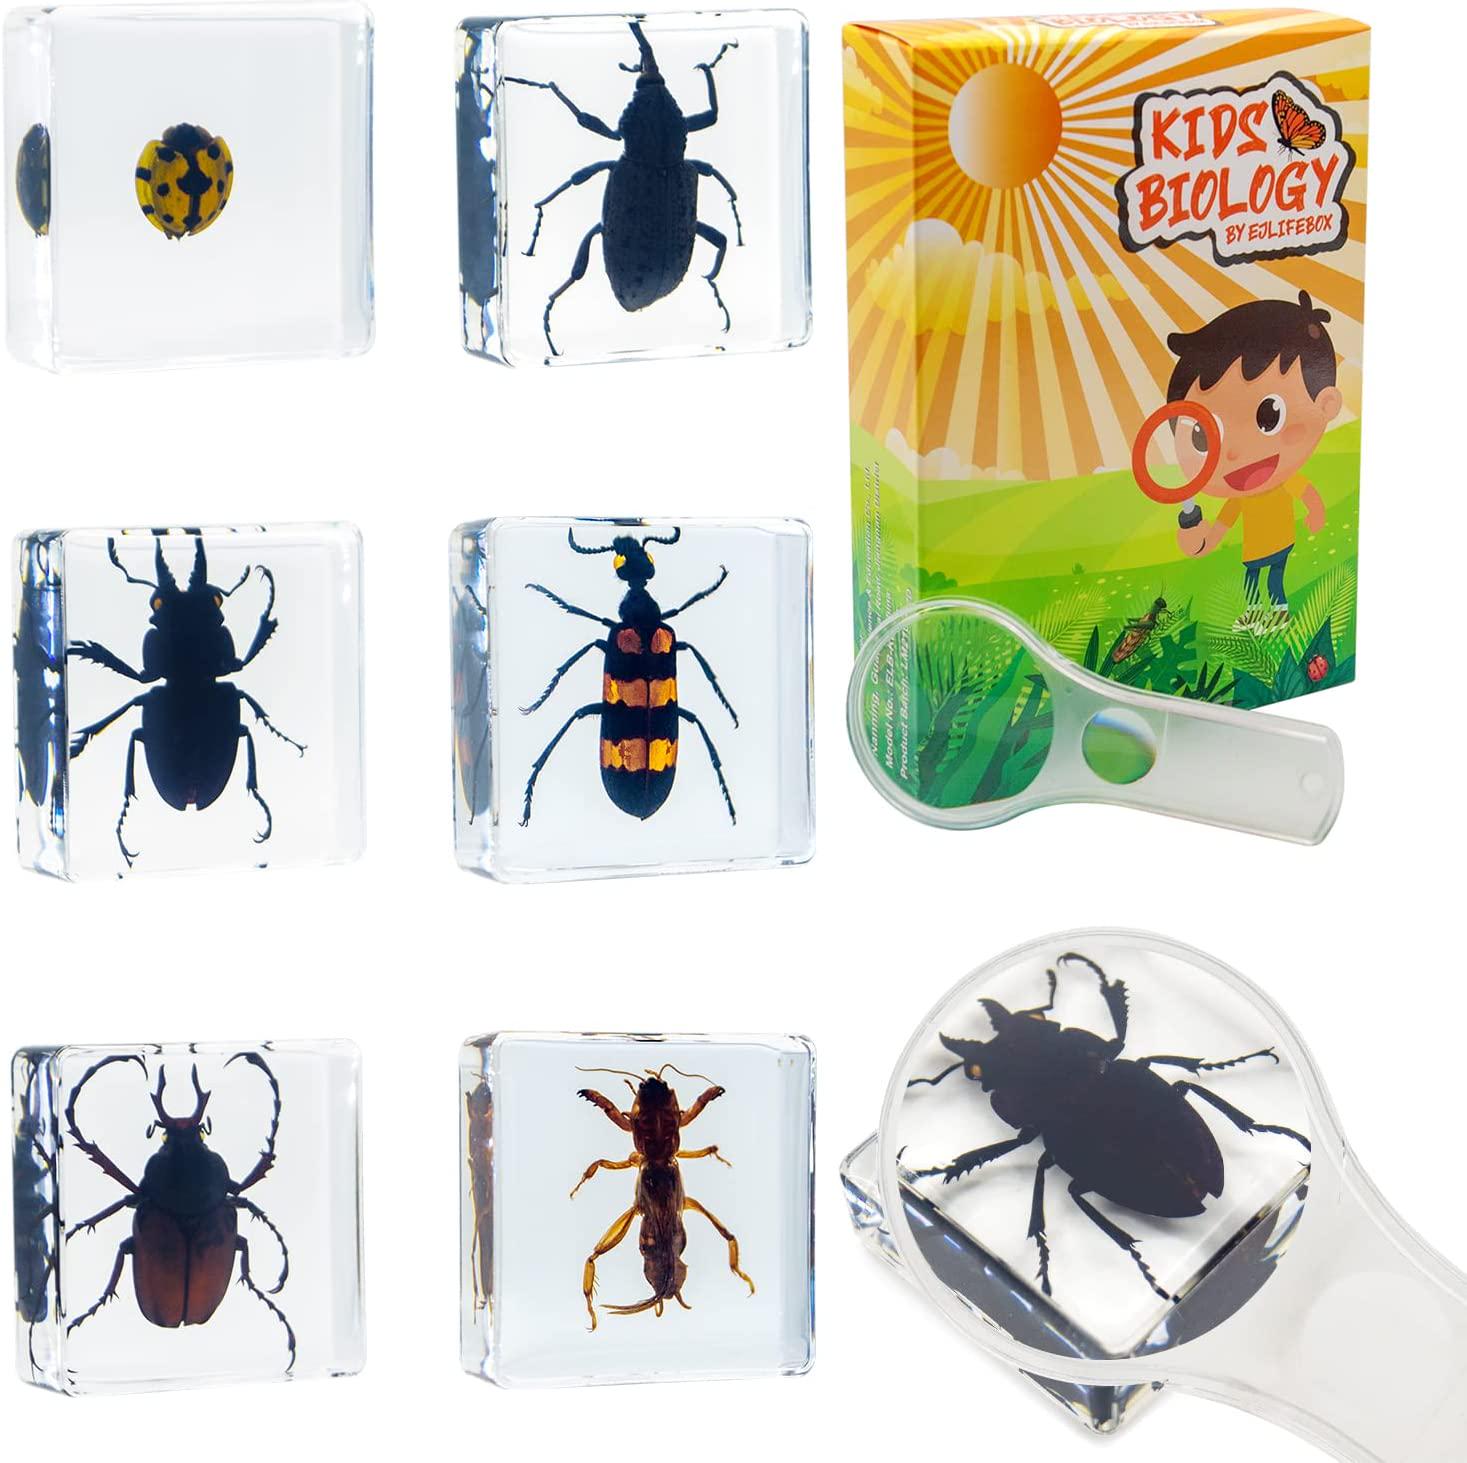 ELifeBox, ELifeBox 6 PCS Acrylic Bugs Specimens Kit, Science Education Toy for Kids